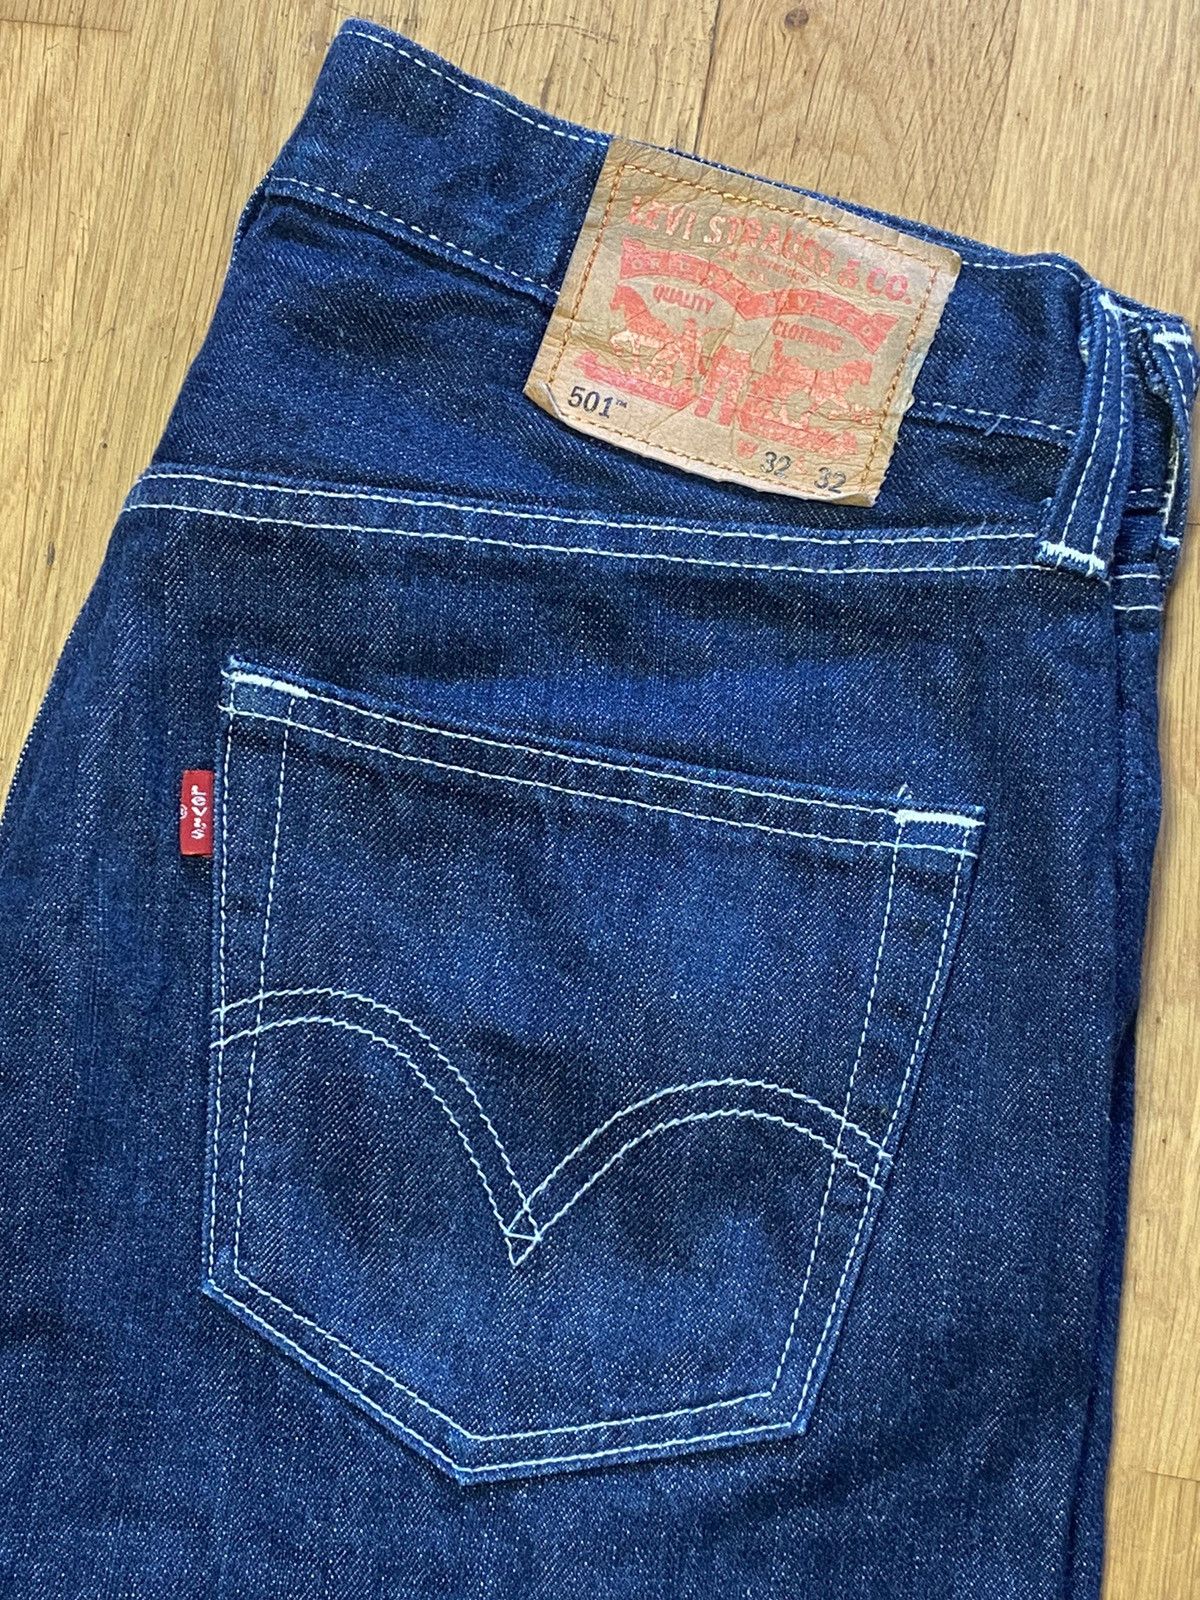 Levi's Levi’s strauss jeans 501 size 32 x 32 Size US 32 / EU 48 - 3 Thumbnail